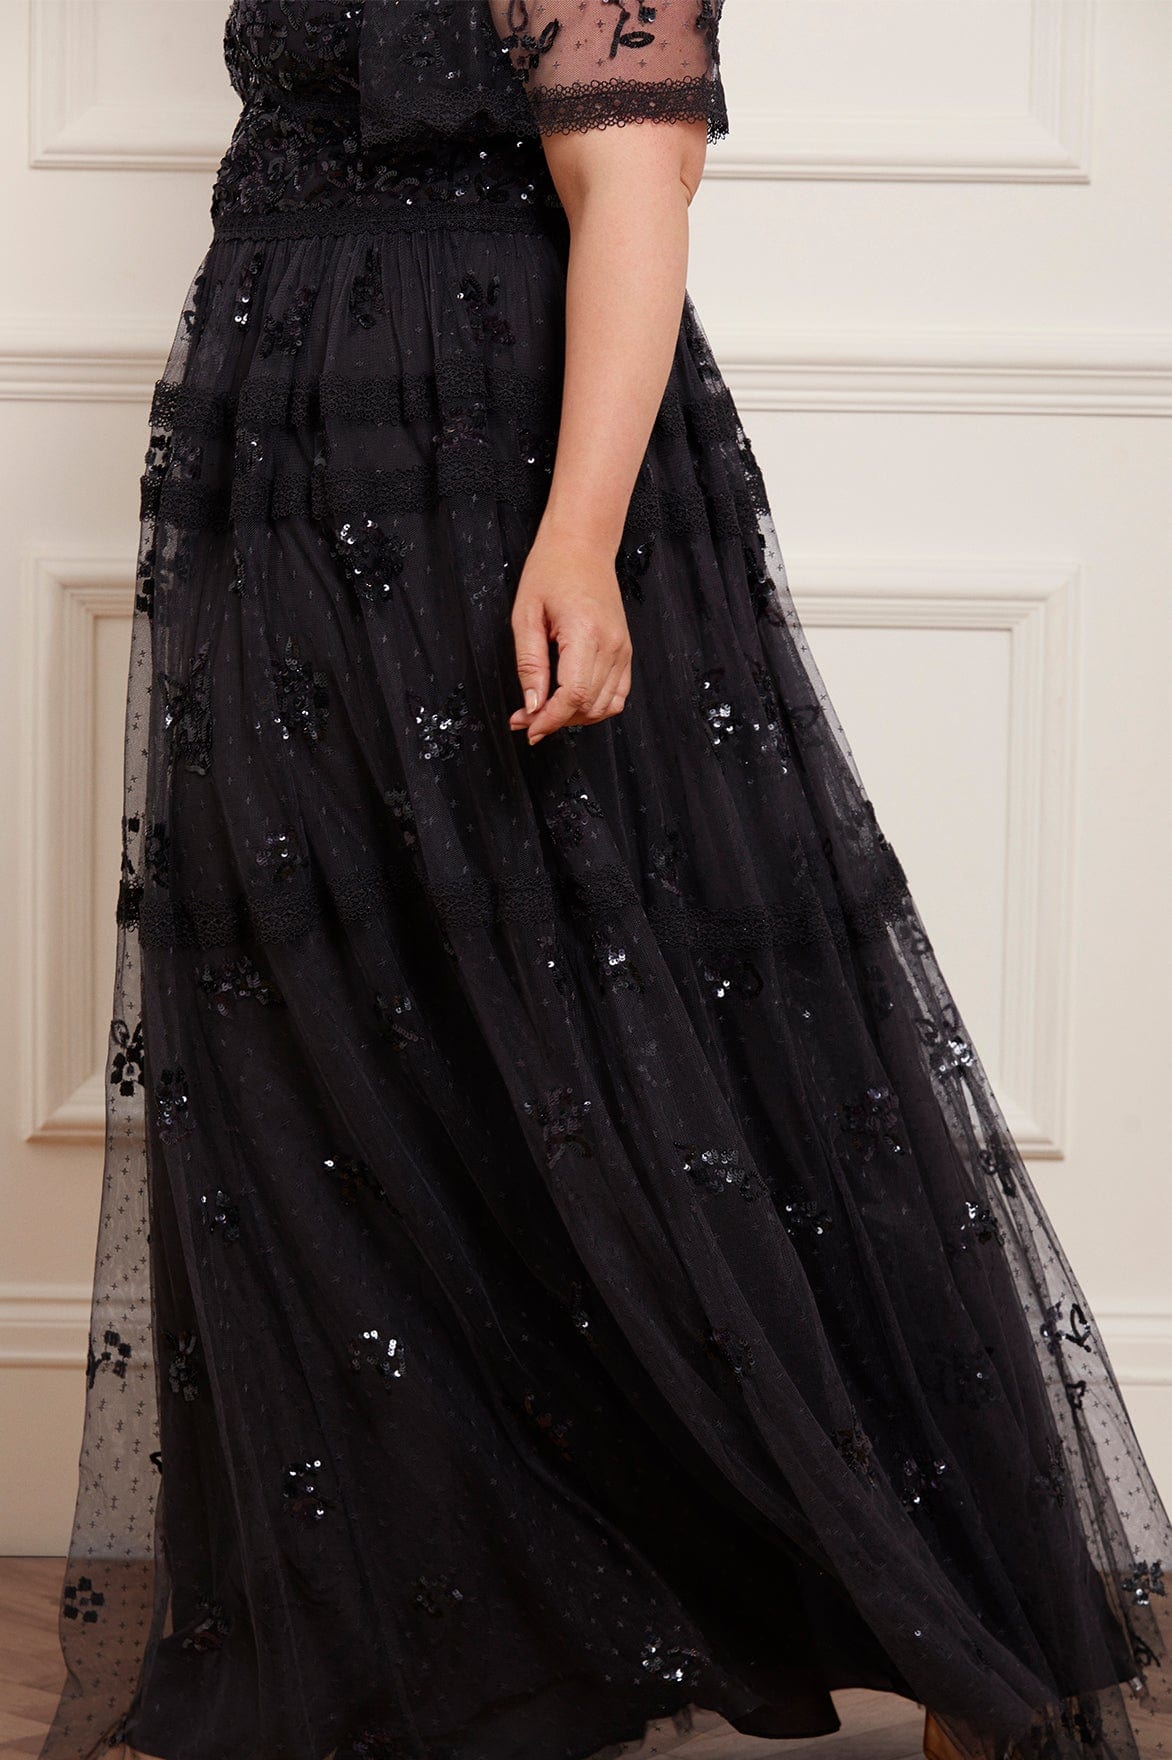 Manushi Chhillar Shines Like A Princess In Black Shimmer Dress